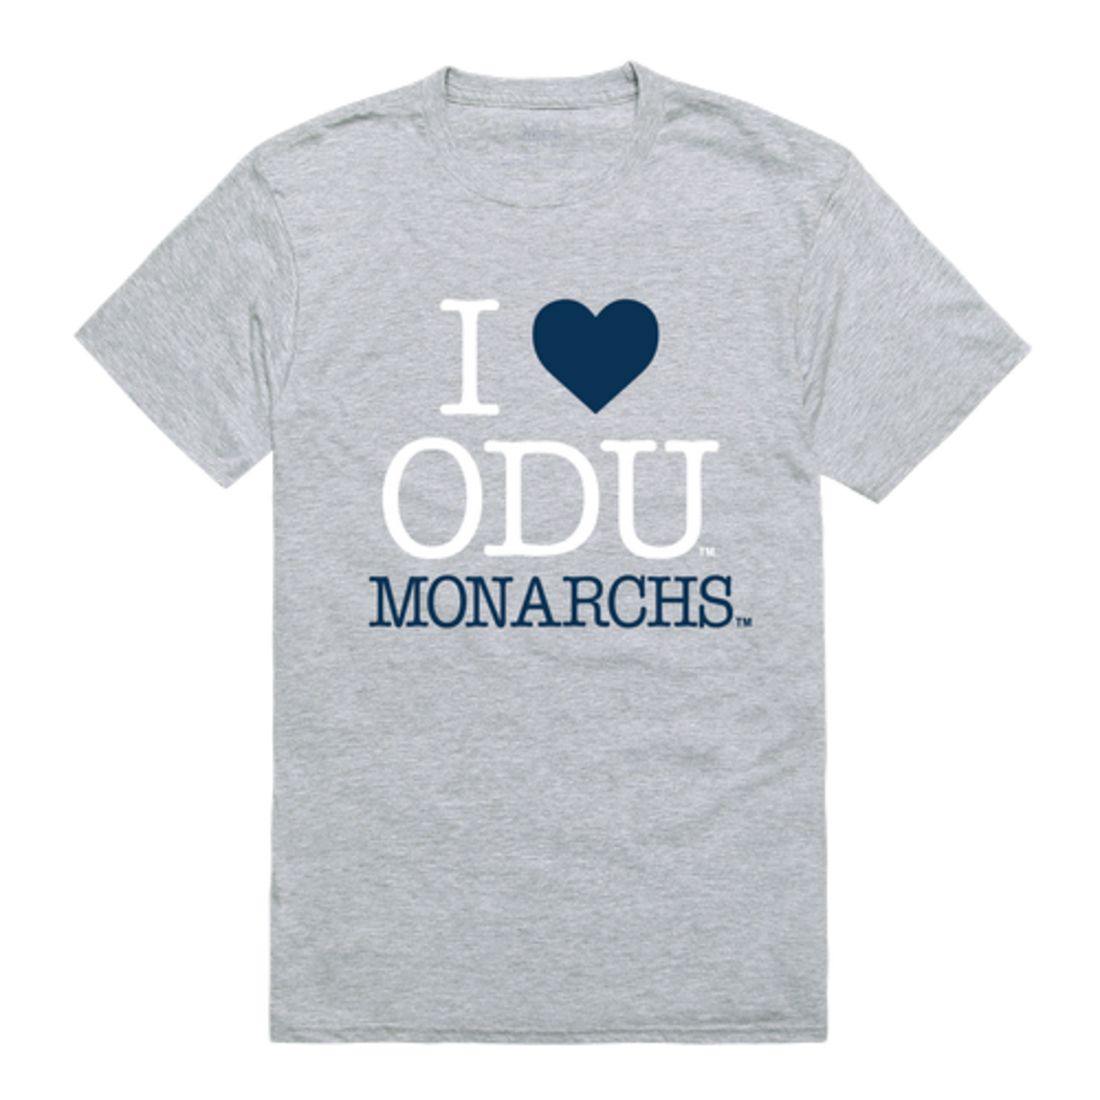 I Love ODU Old Dominion University Monarchs T-Shirt-Campus-Wardrobe